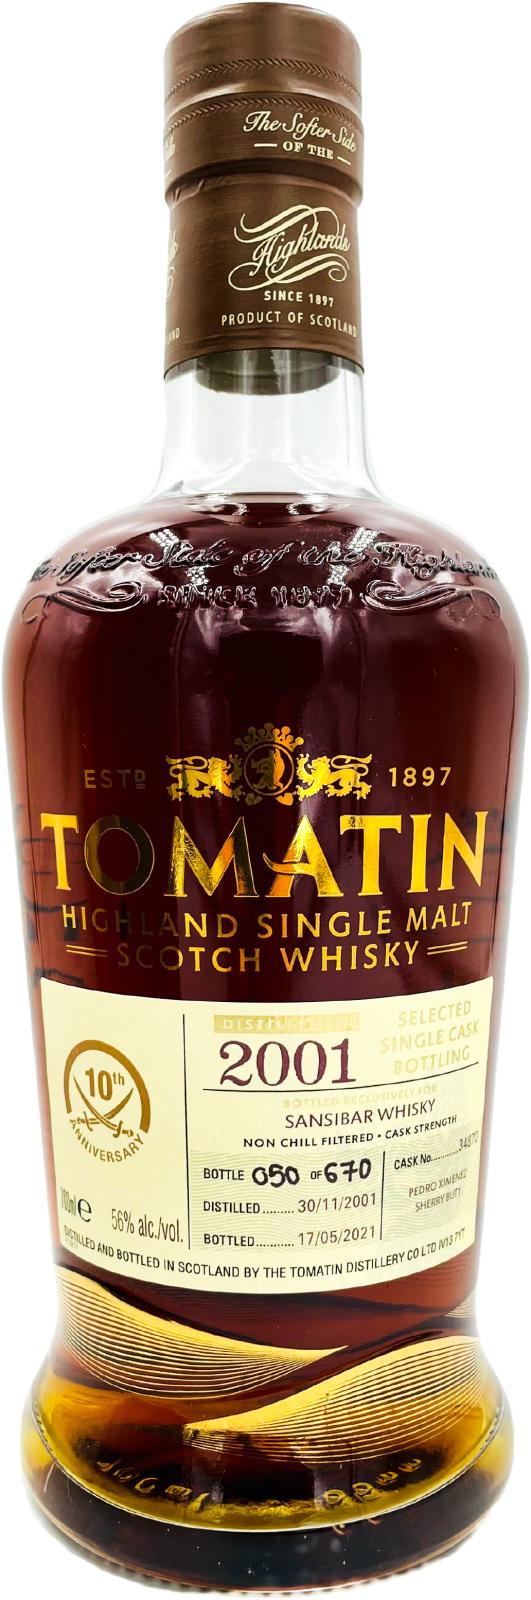 Tomatin 2001 PX Sherry Butt Sansibar Whisky 10th Anniversary 56% 700ml